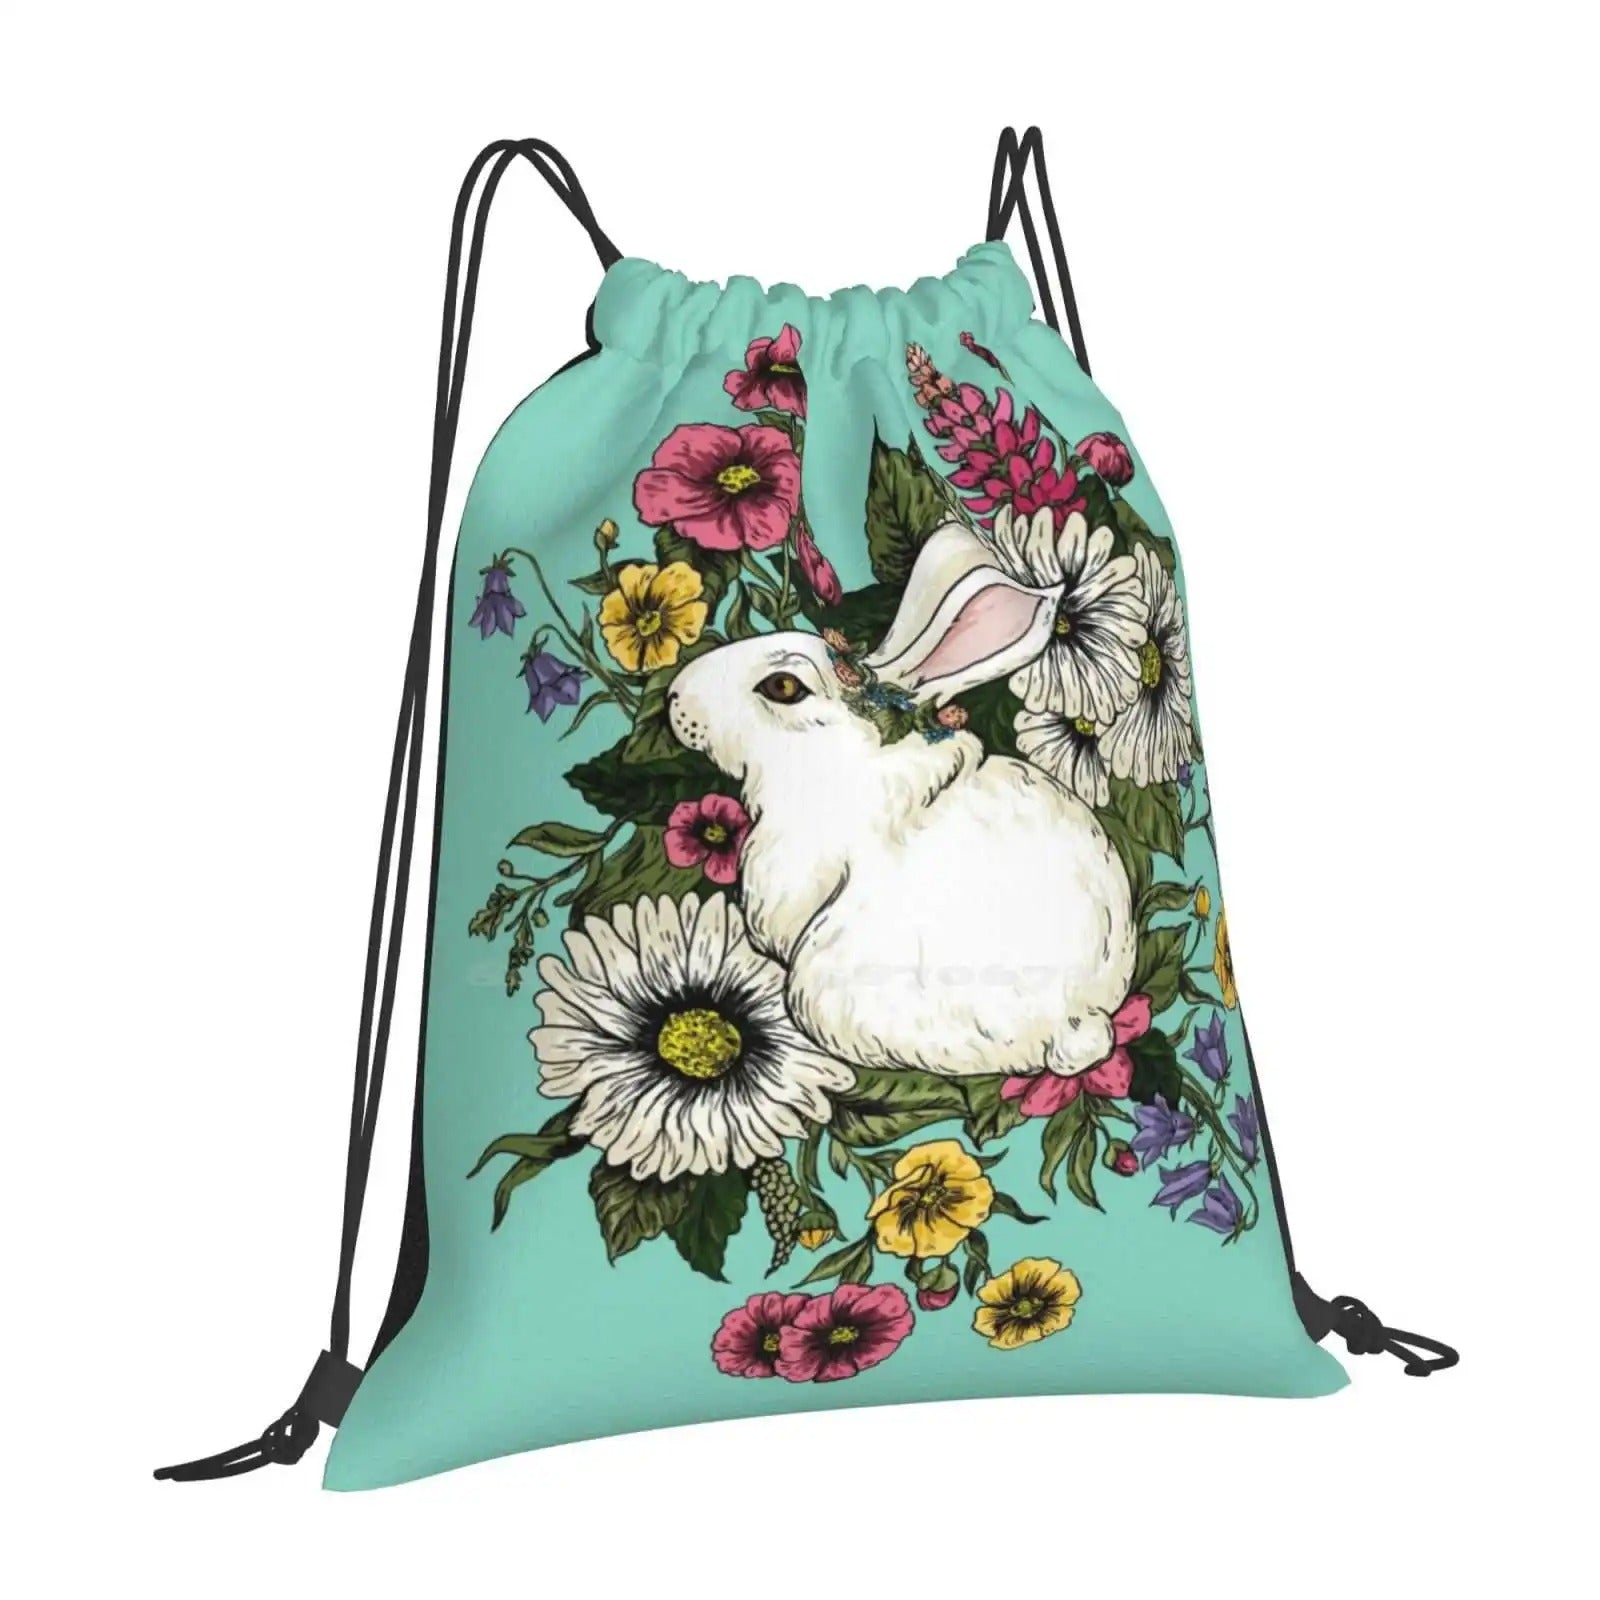 Big Bunny Backpack - Drawstring Bag